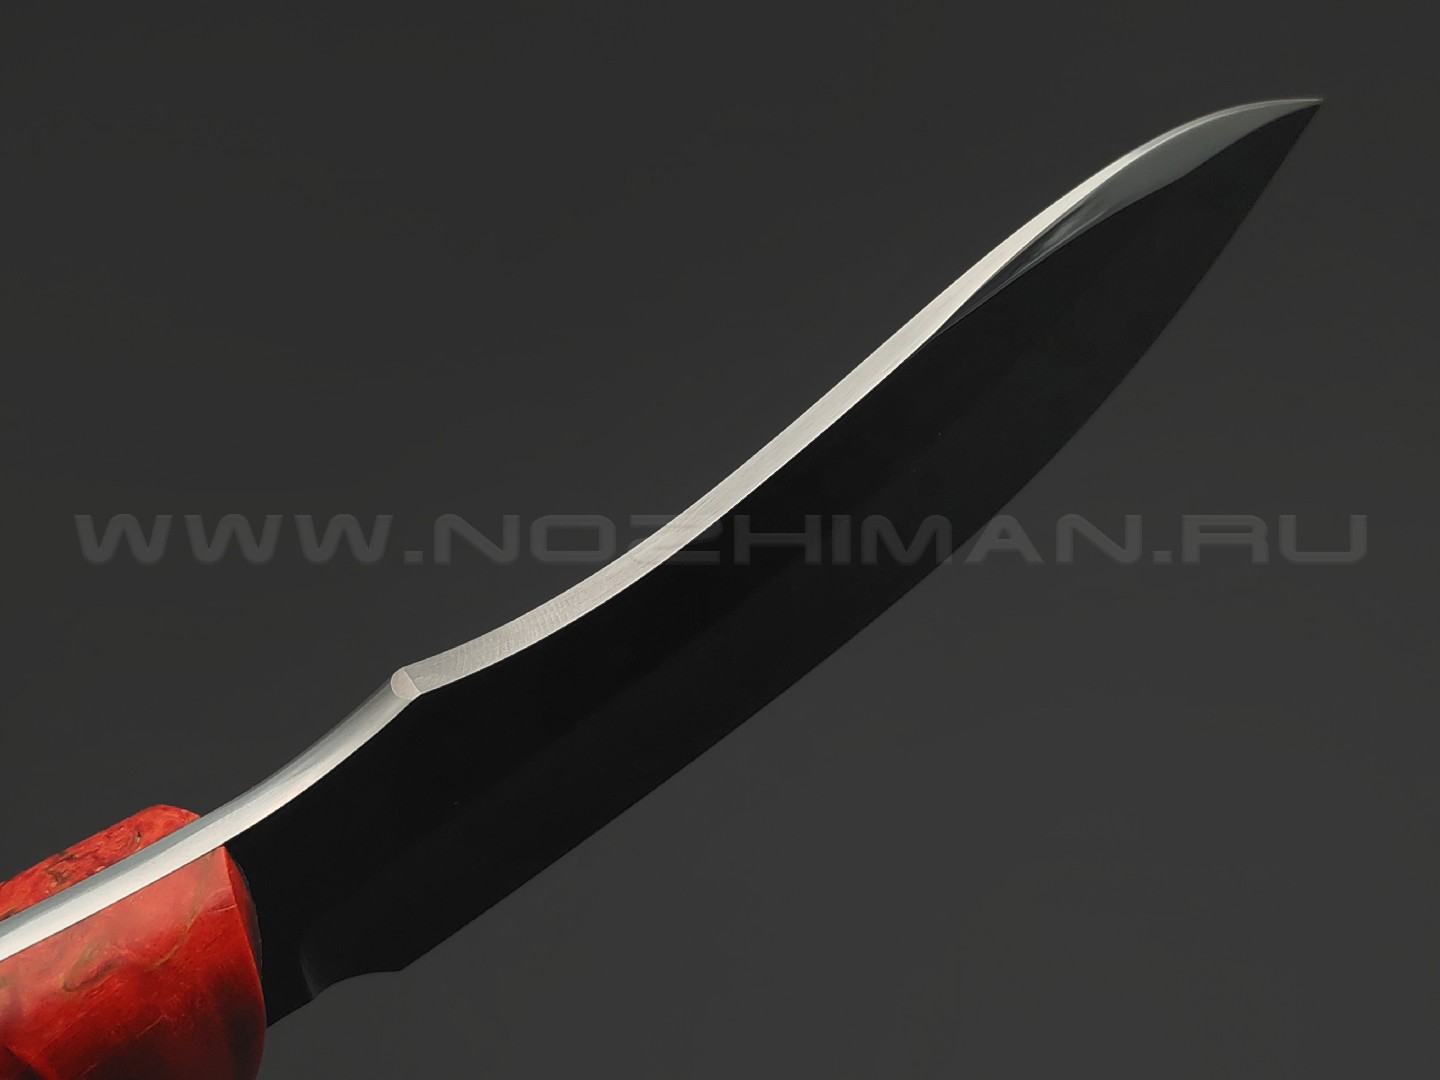 Товарищество Завьялова нож Че-Гевара сталь K340, рукоять Стаб. дерево красное